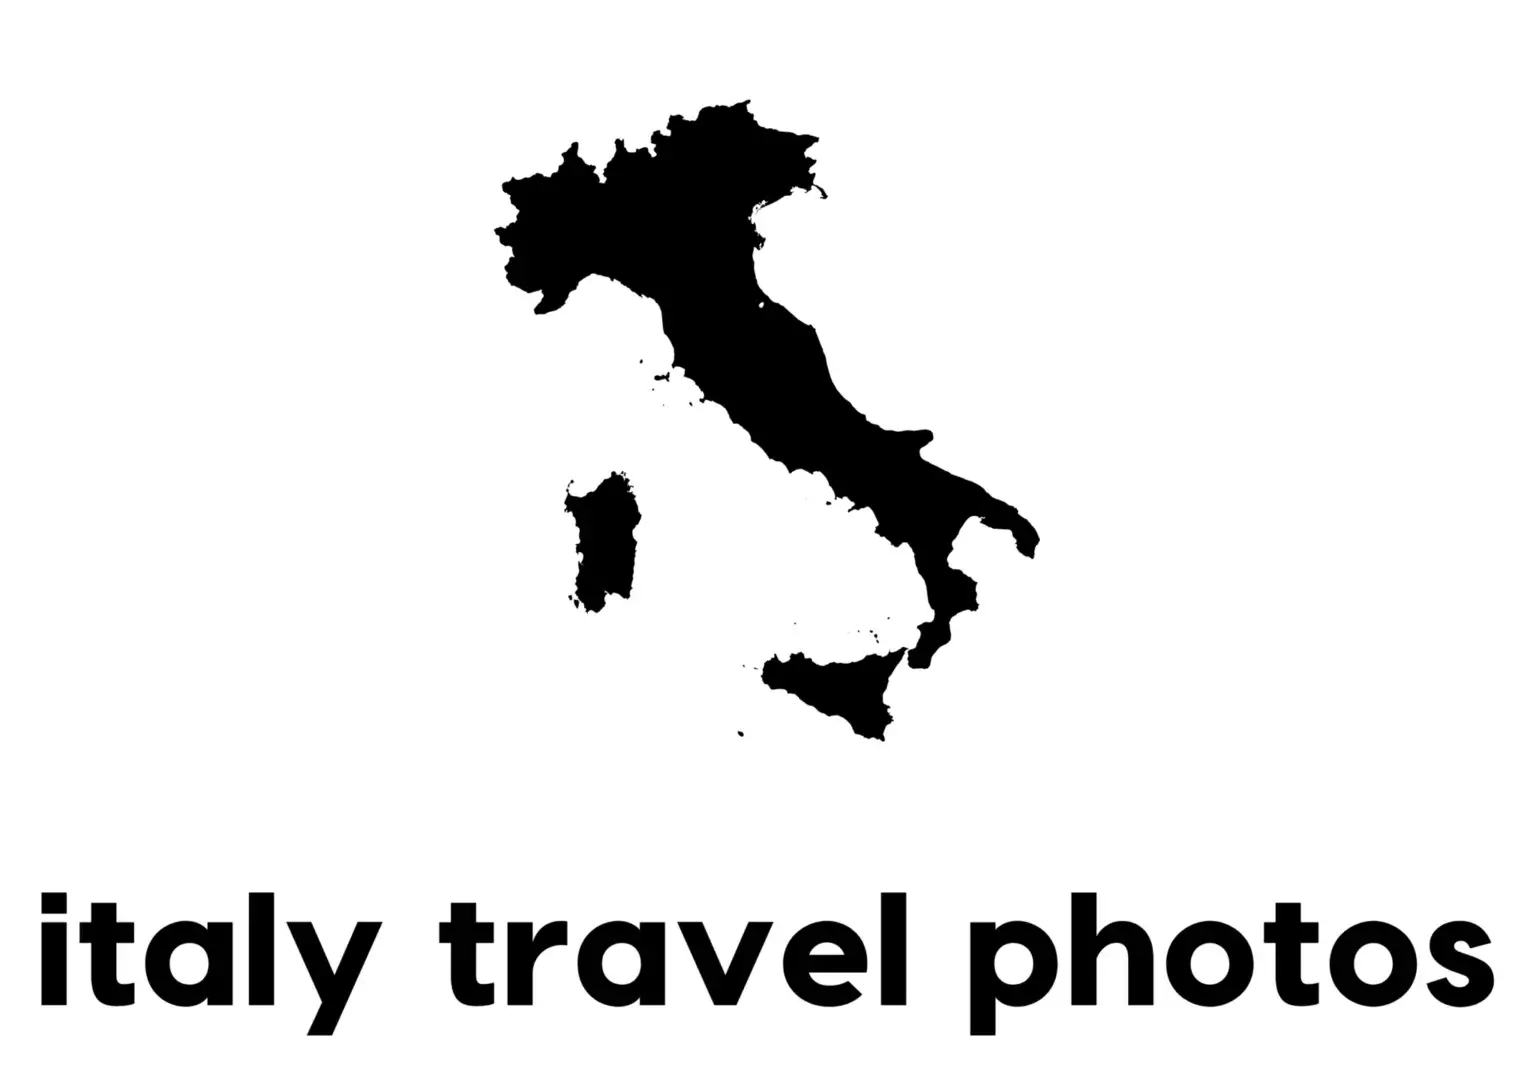 Italy Travel Photos - site logo